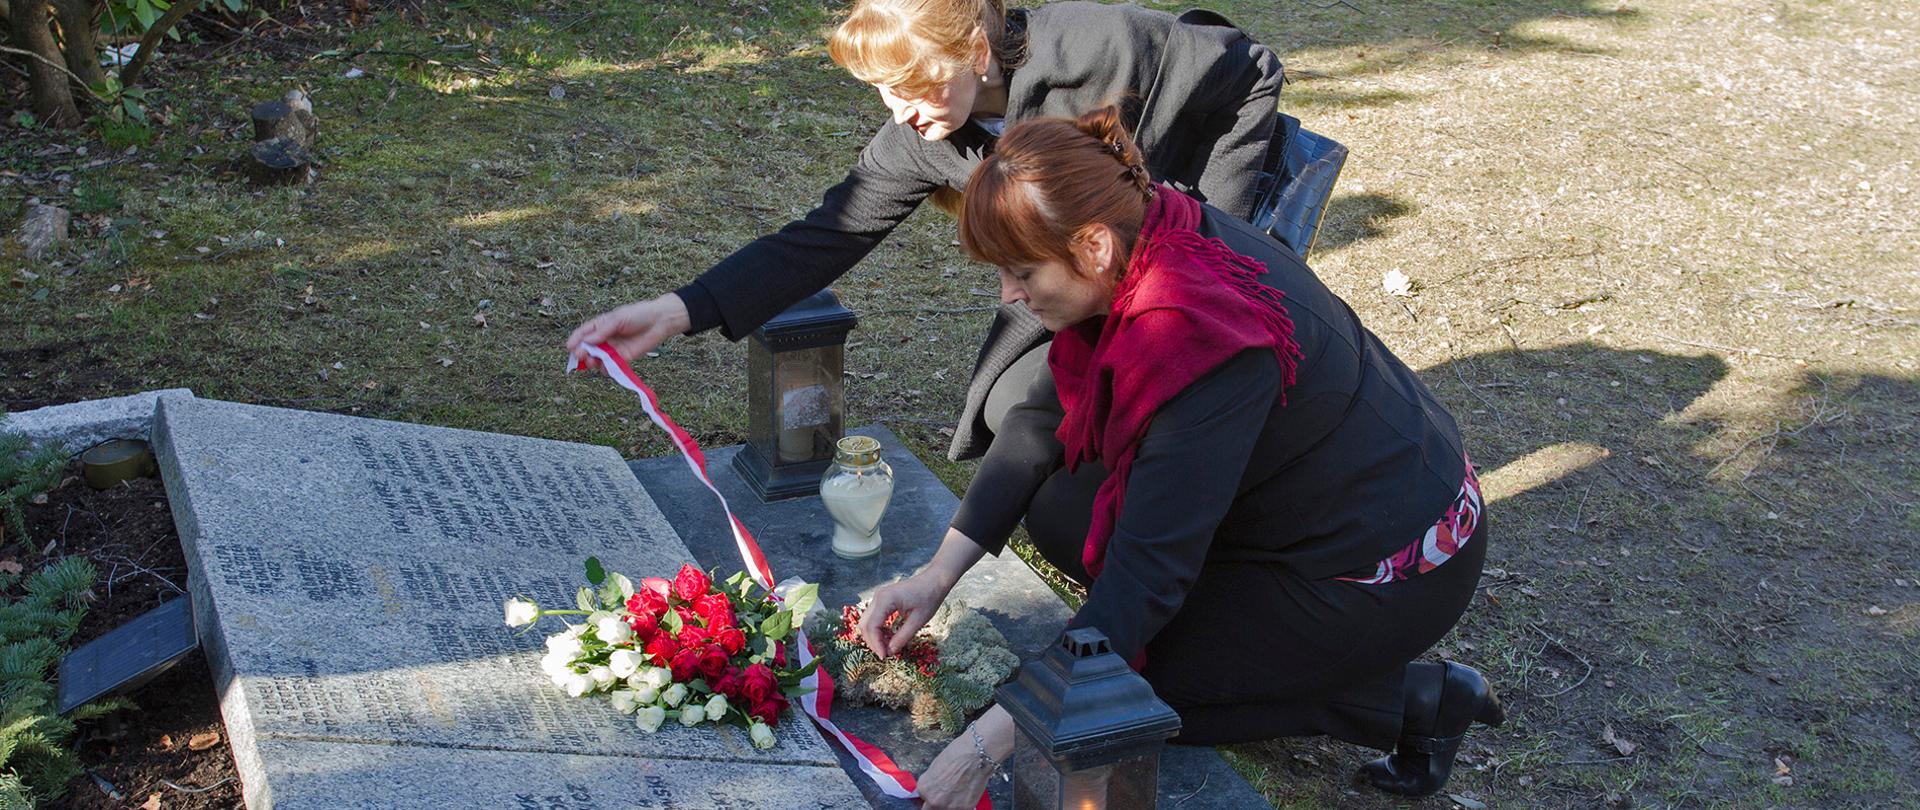 The tenth anniversary of the Smolensk plane crash